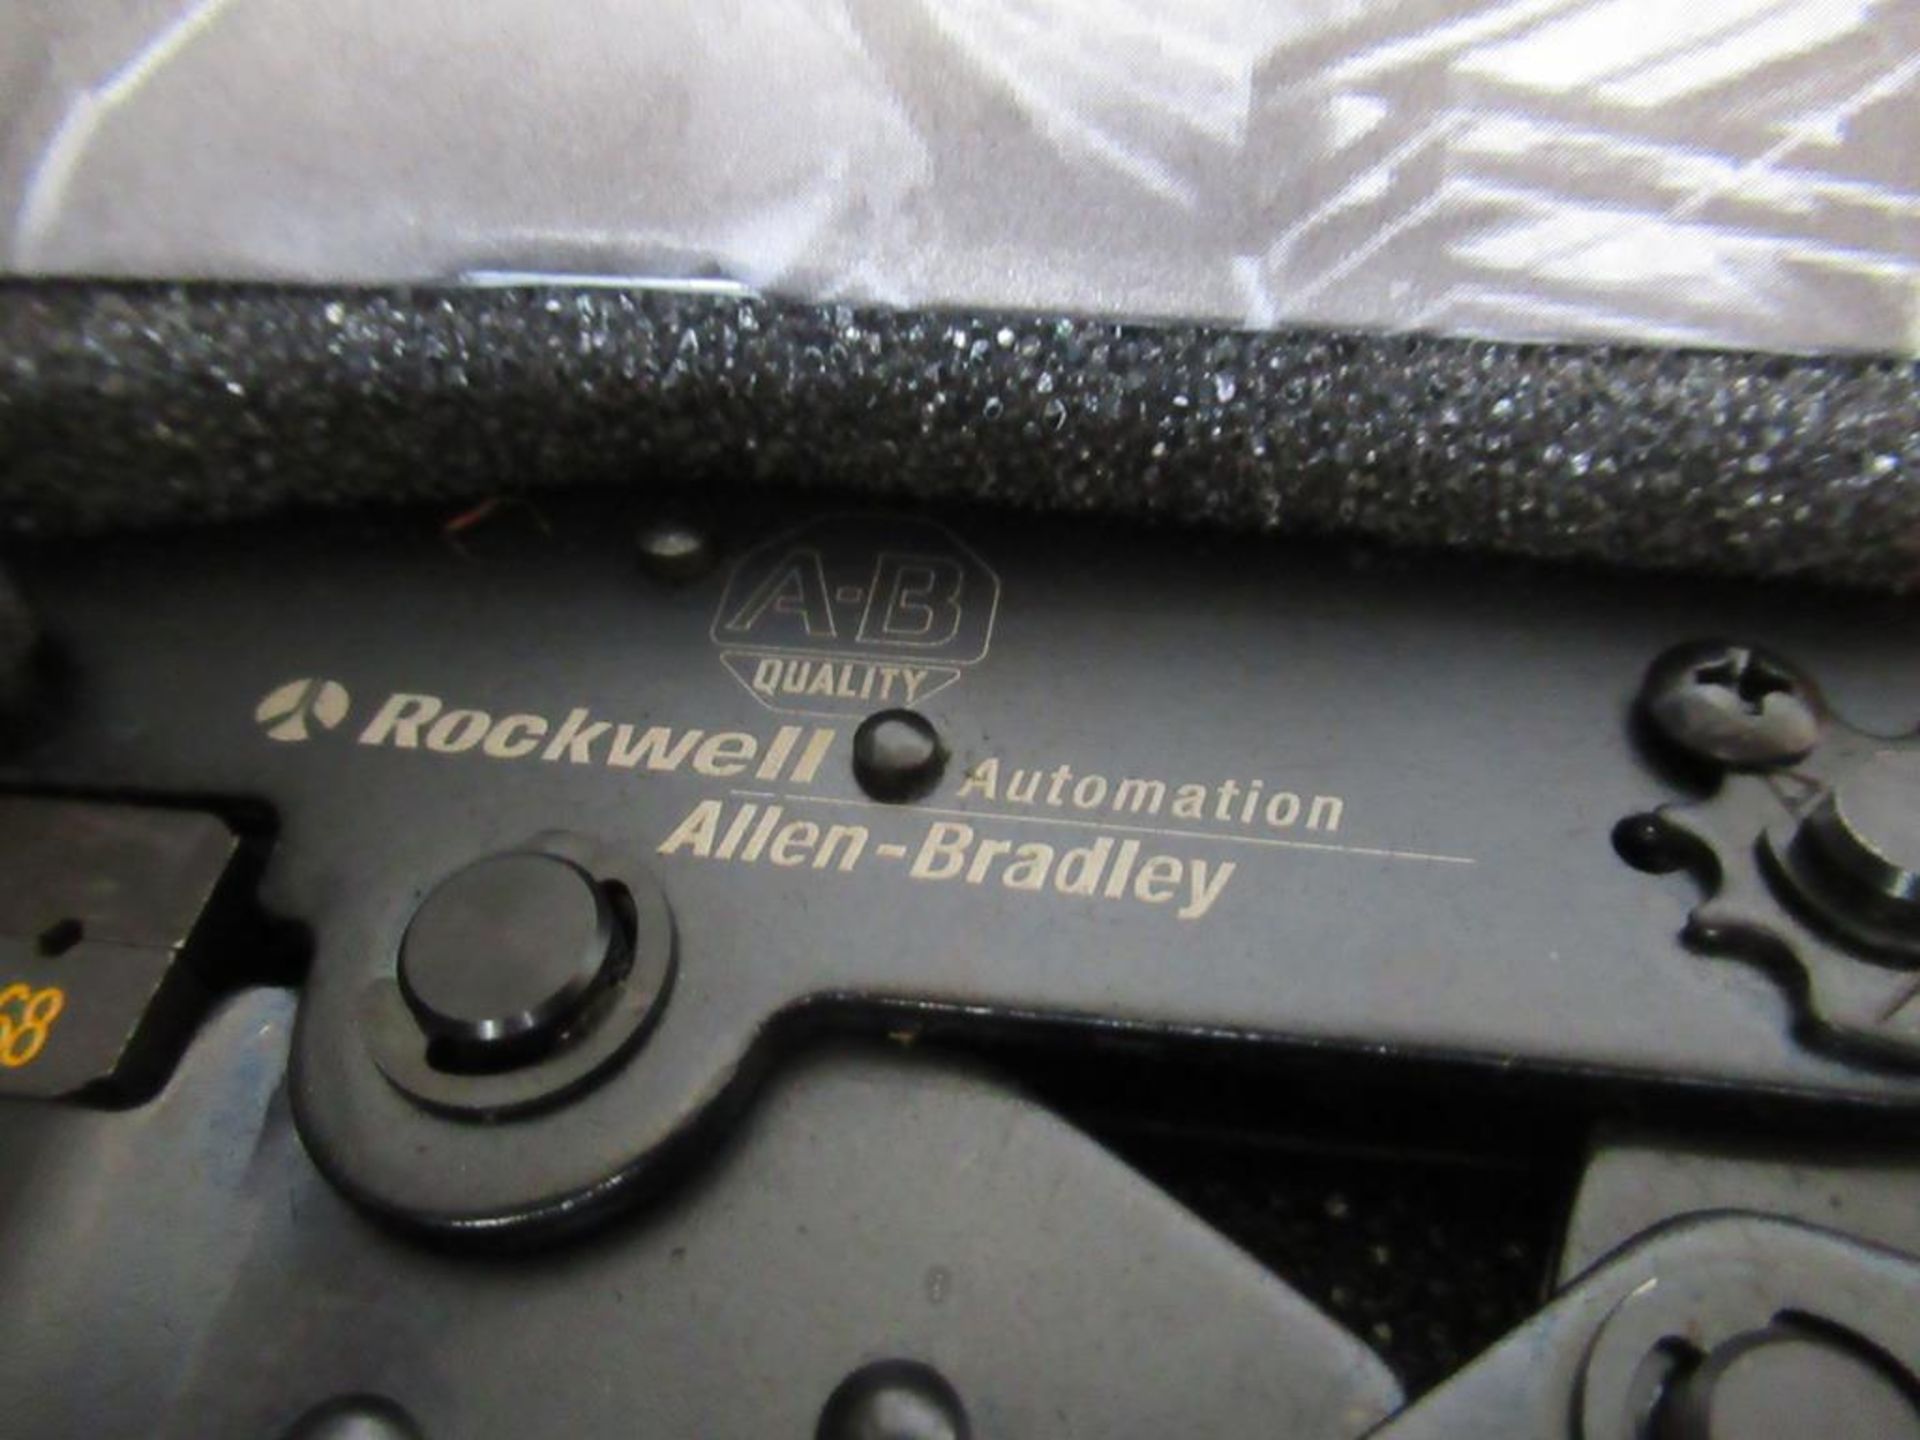 Allen-Bradley Coax tool kit (incomplete) in case - Image 3 of 5